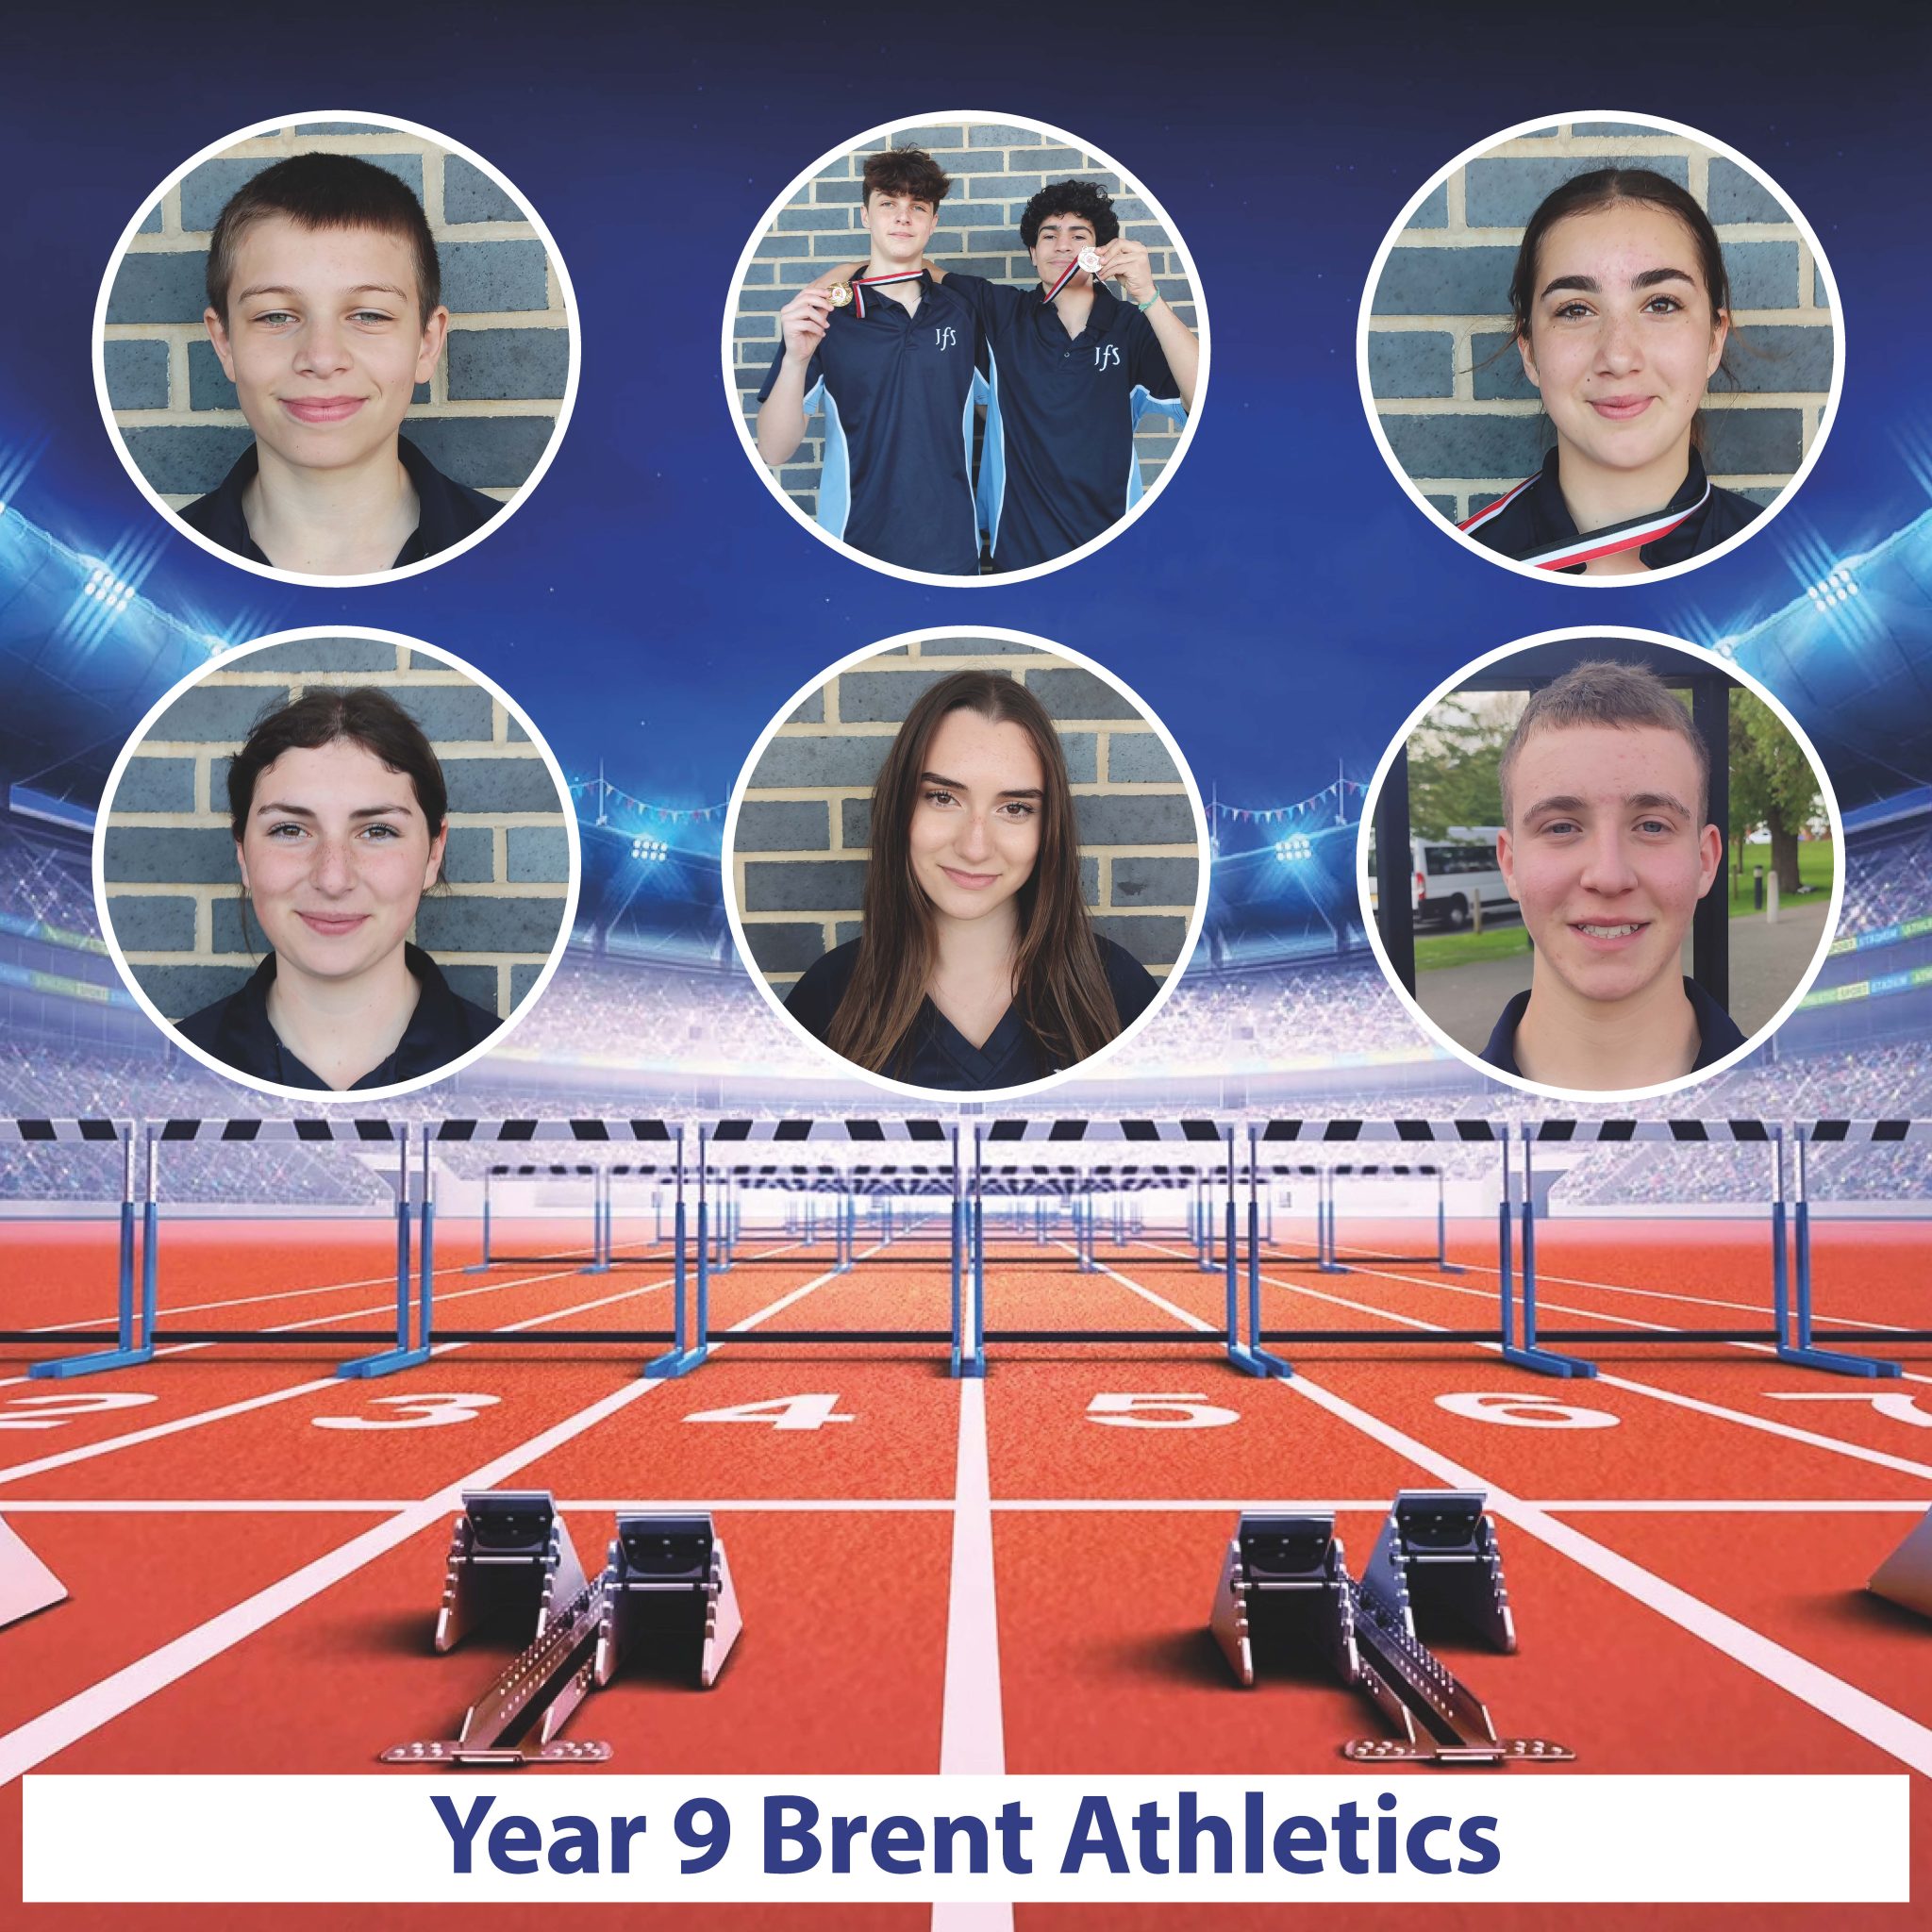 Year 9 Brent Athletics